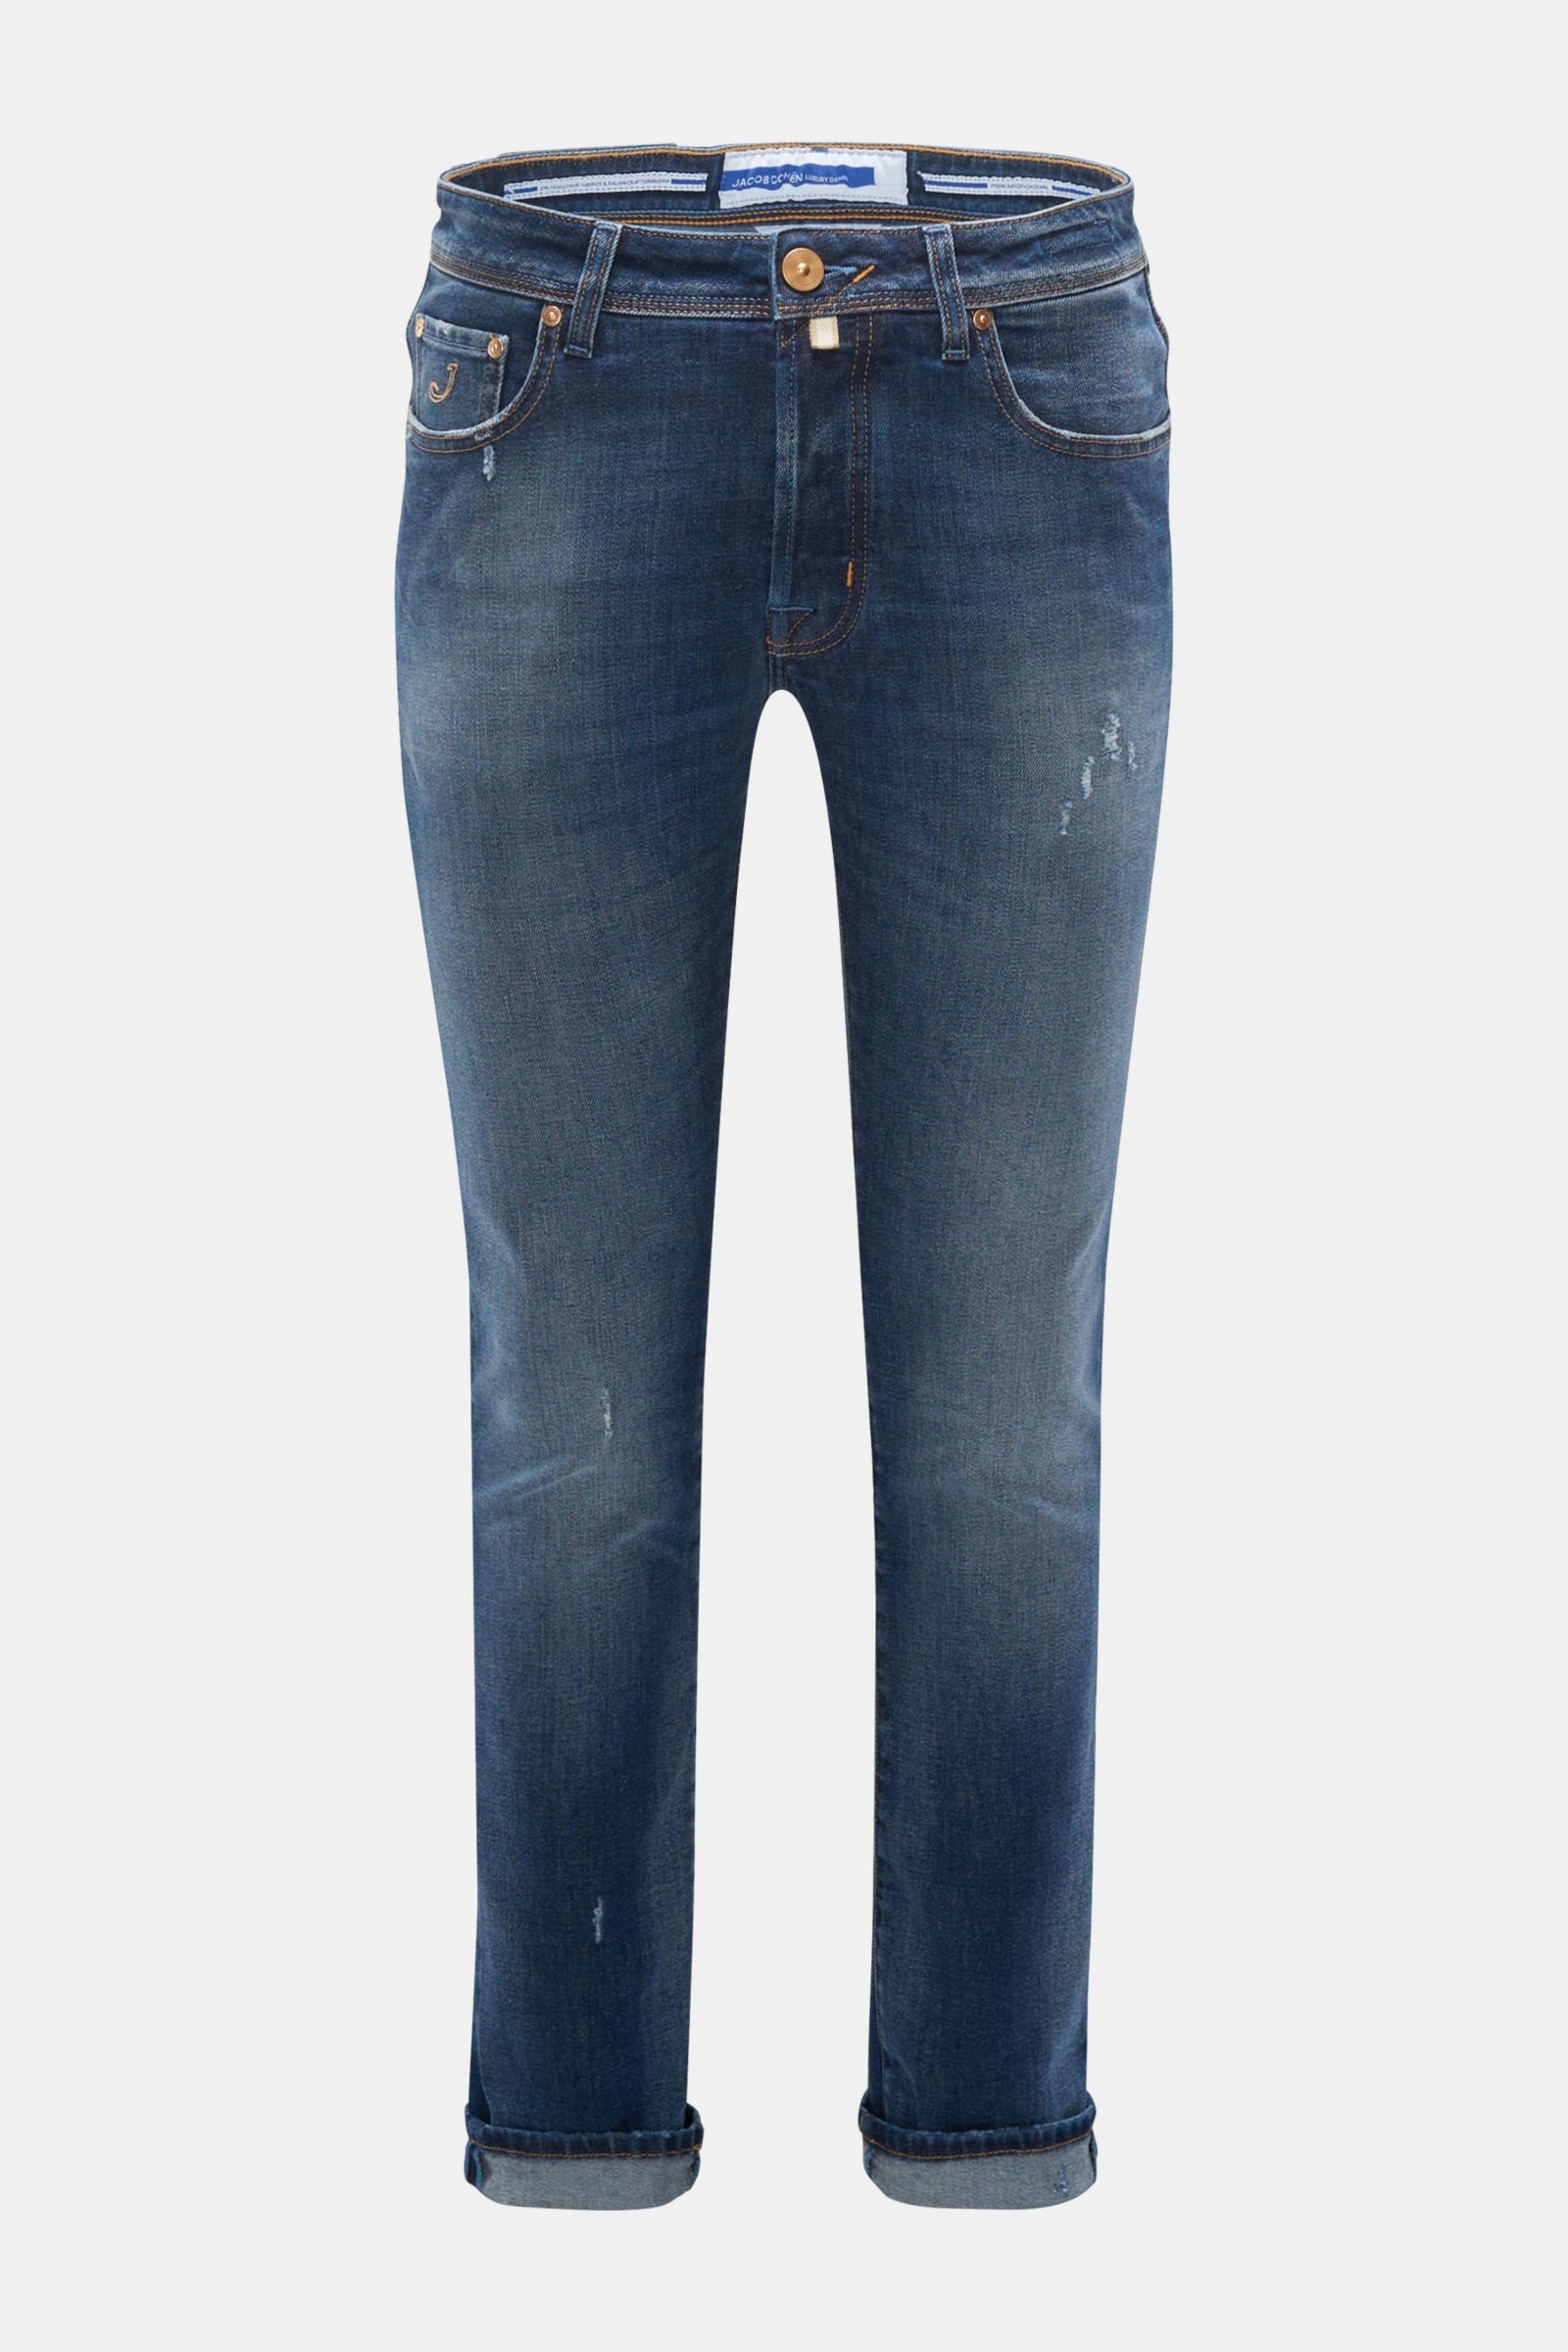 Jeans 'Bard' grey-blue (formerly J688)